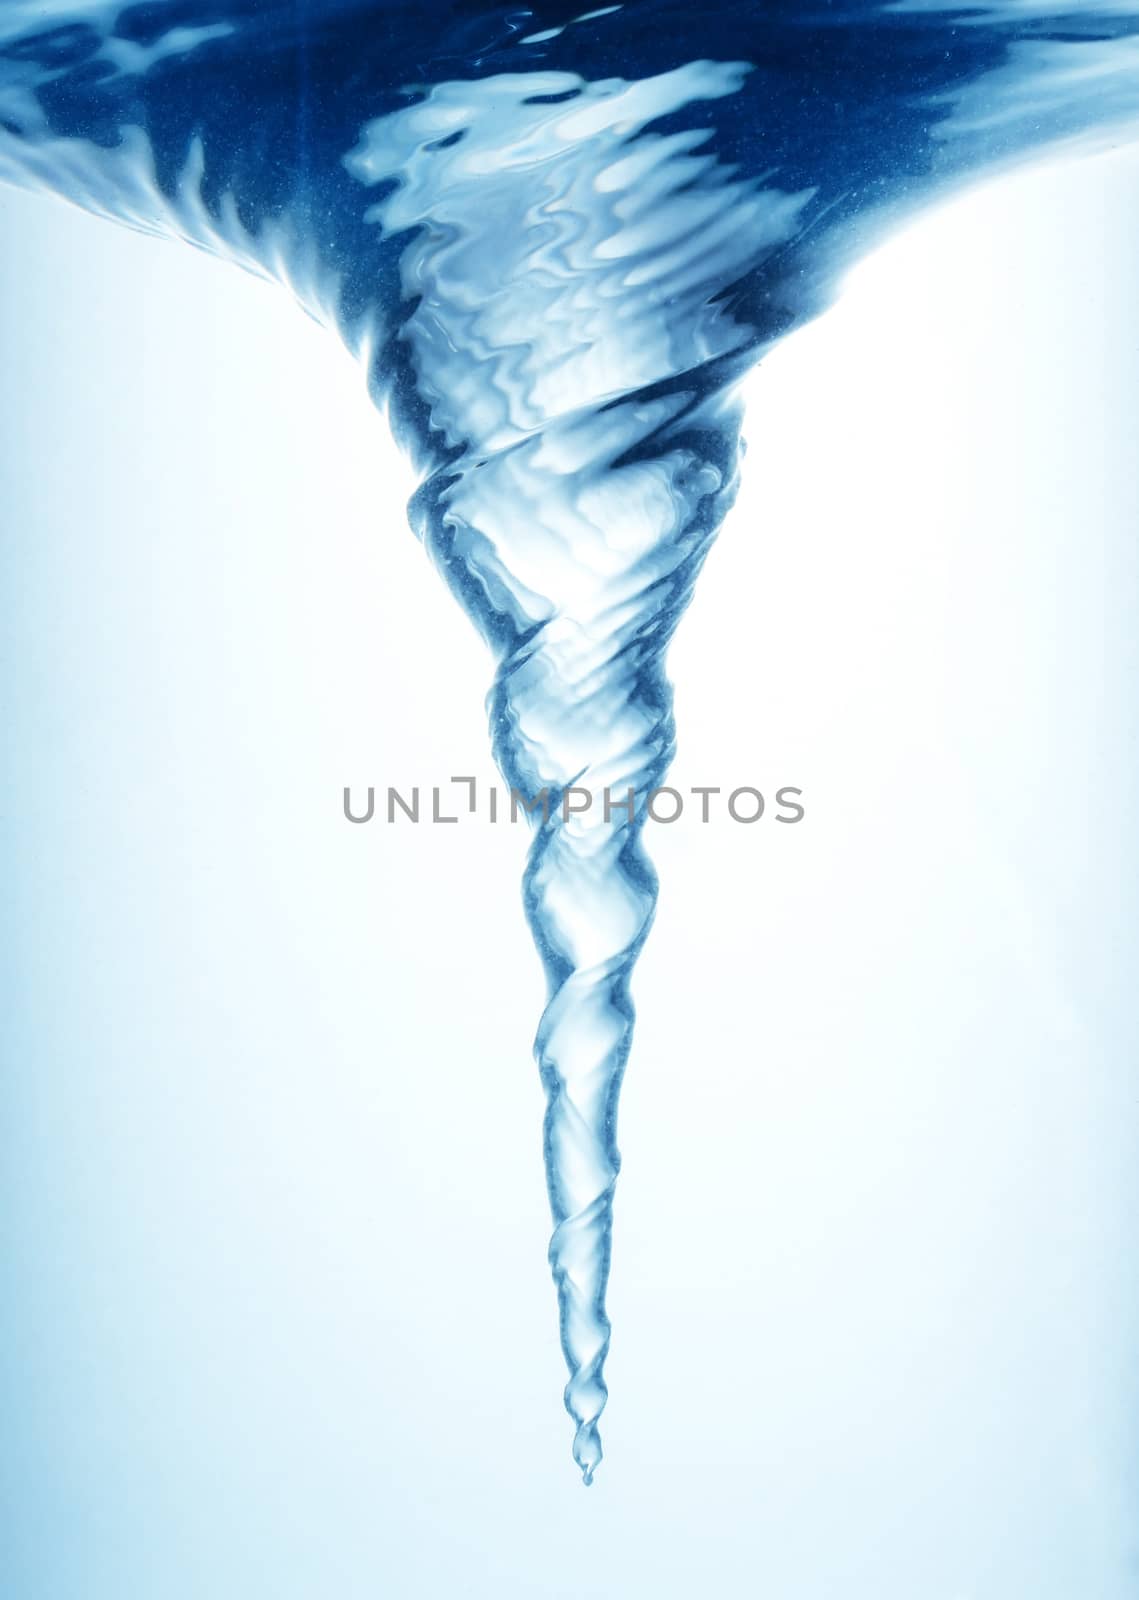 Whirlpool underwater in blue clean transparent water